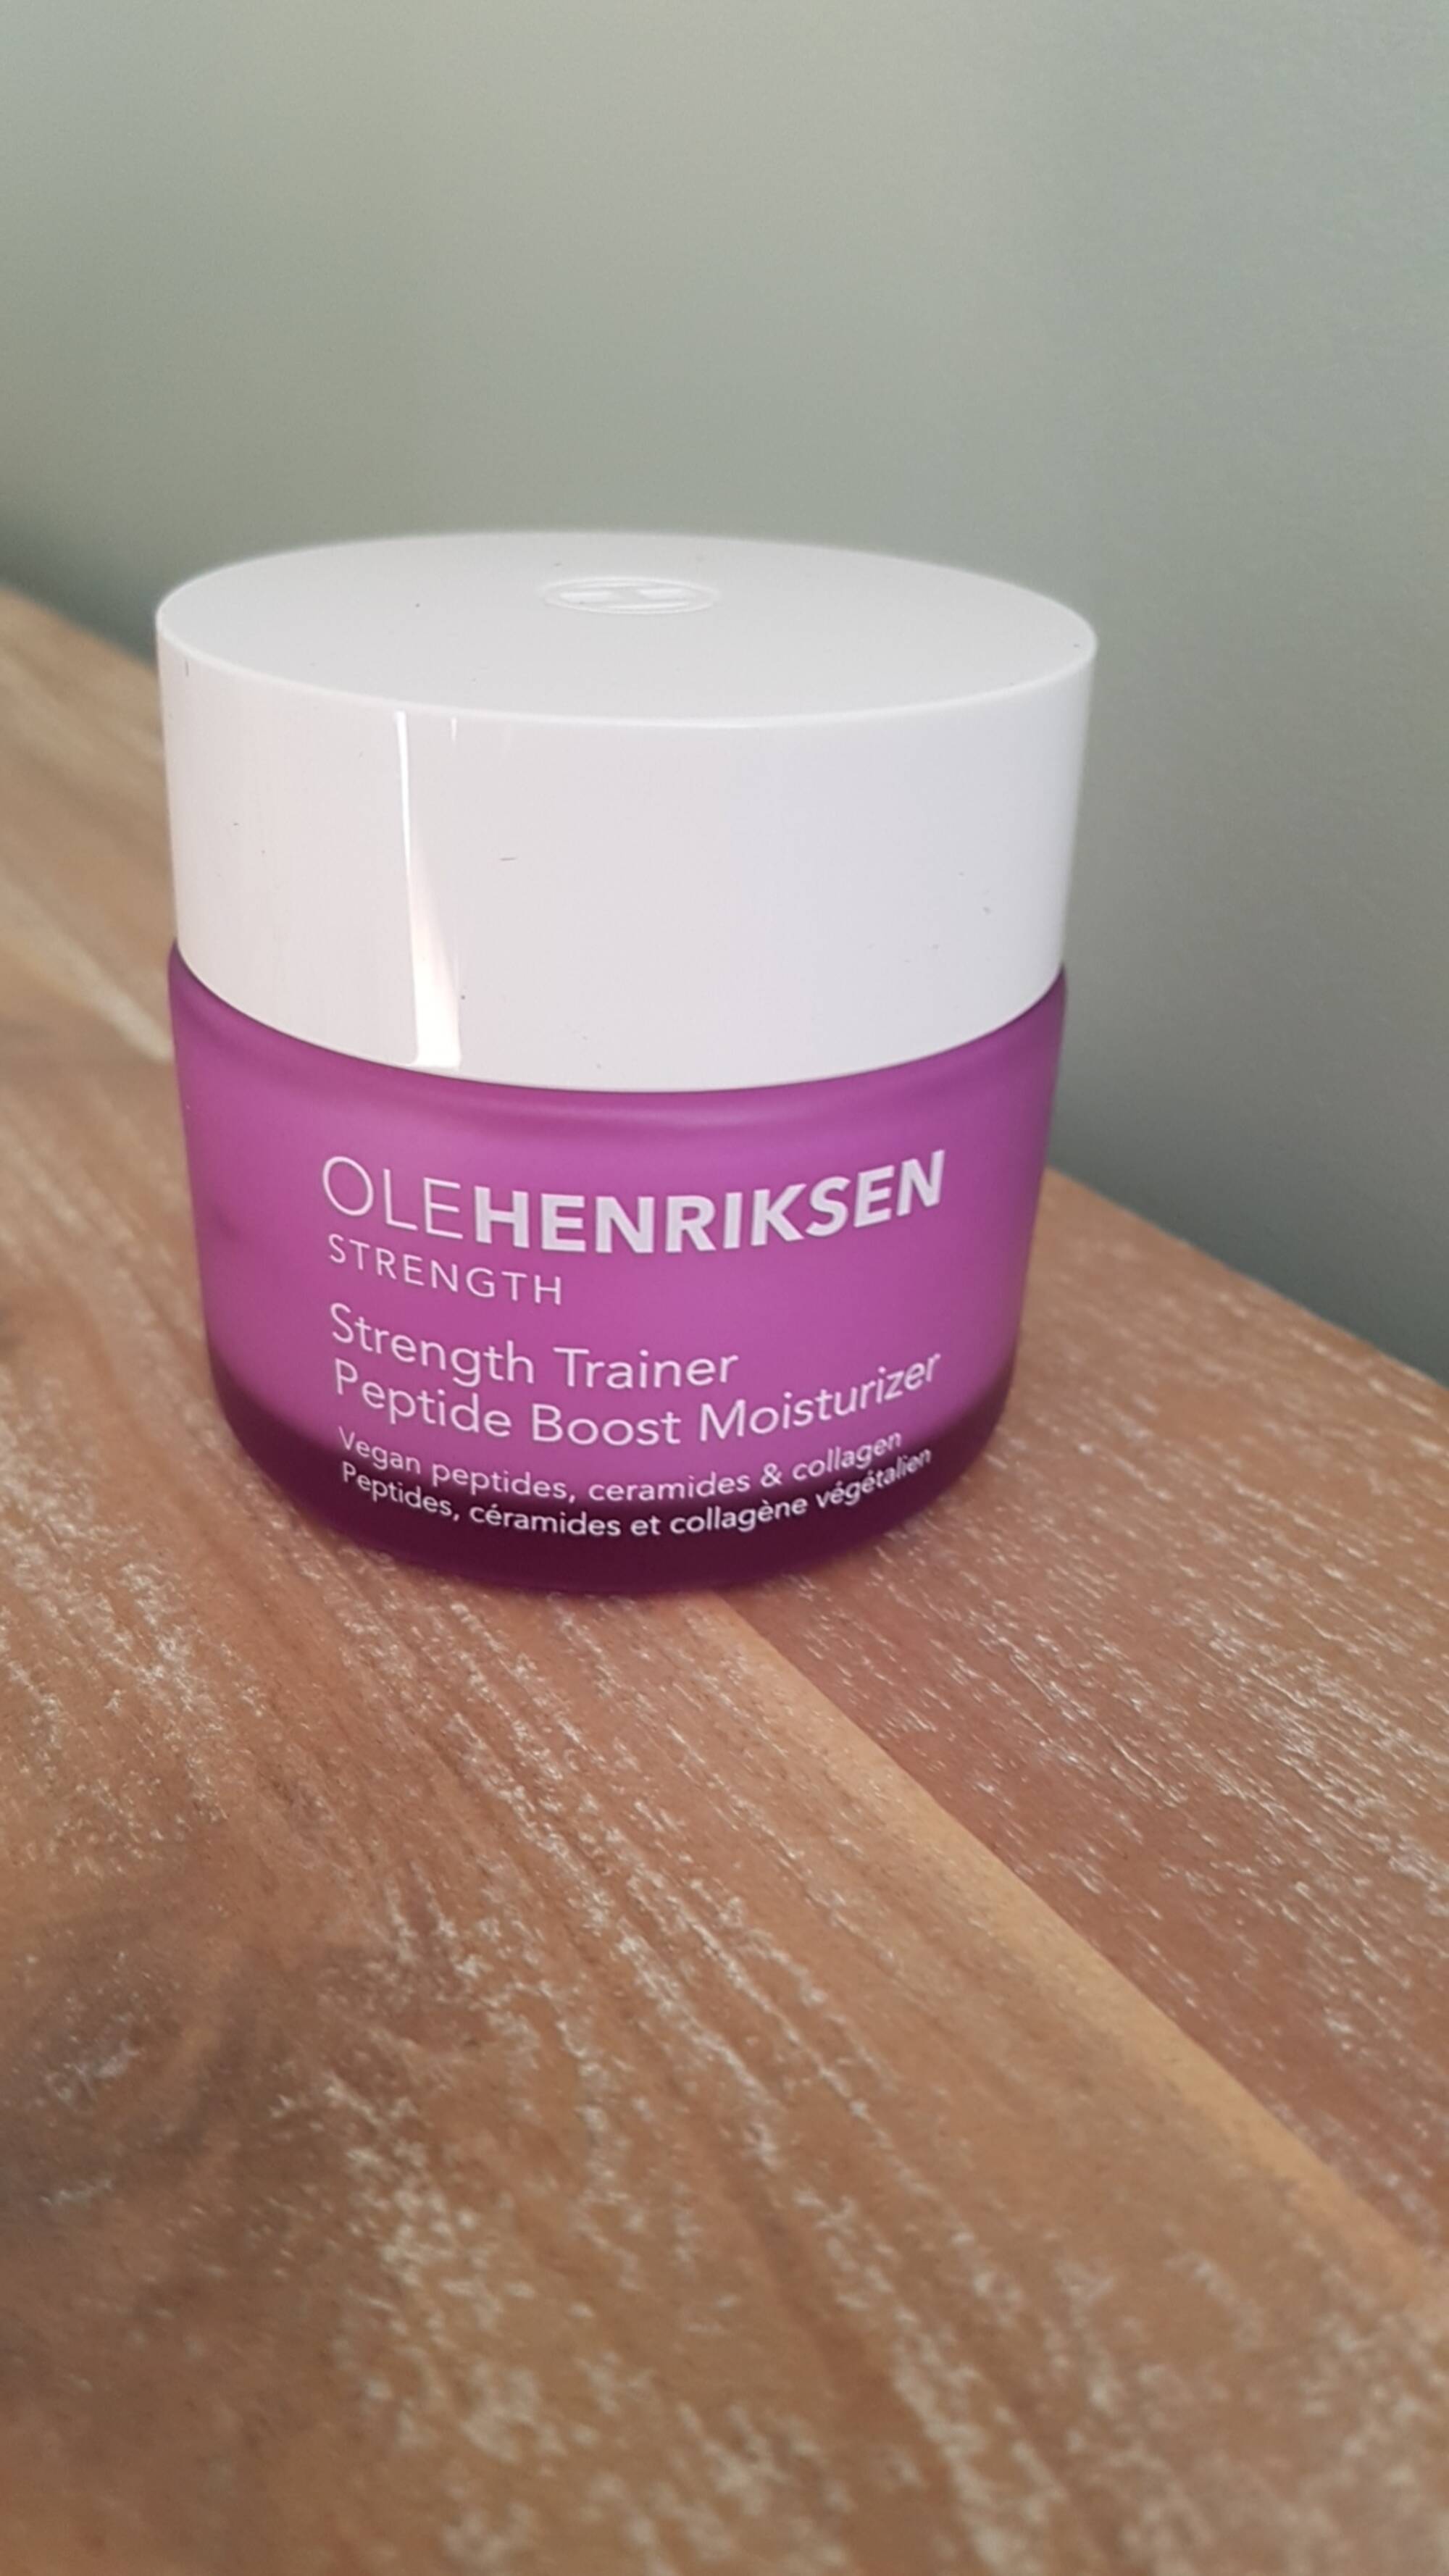 OLE HENRIKSEN - Strength trainer - Peptide boost moisturizer